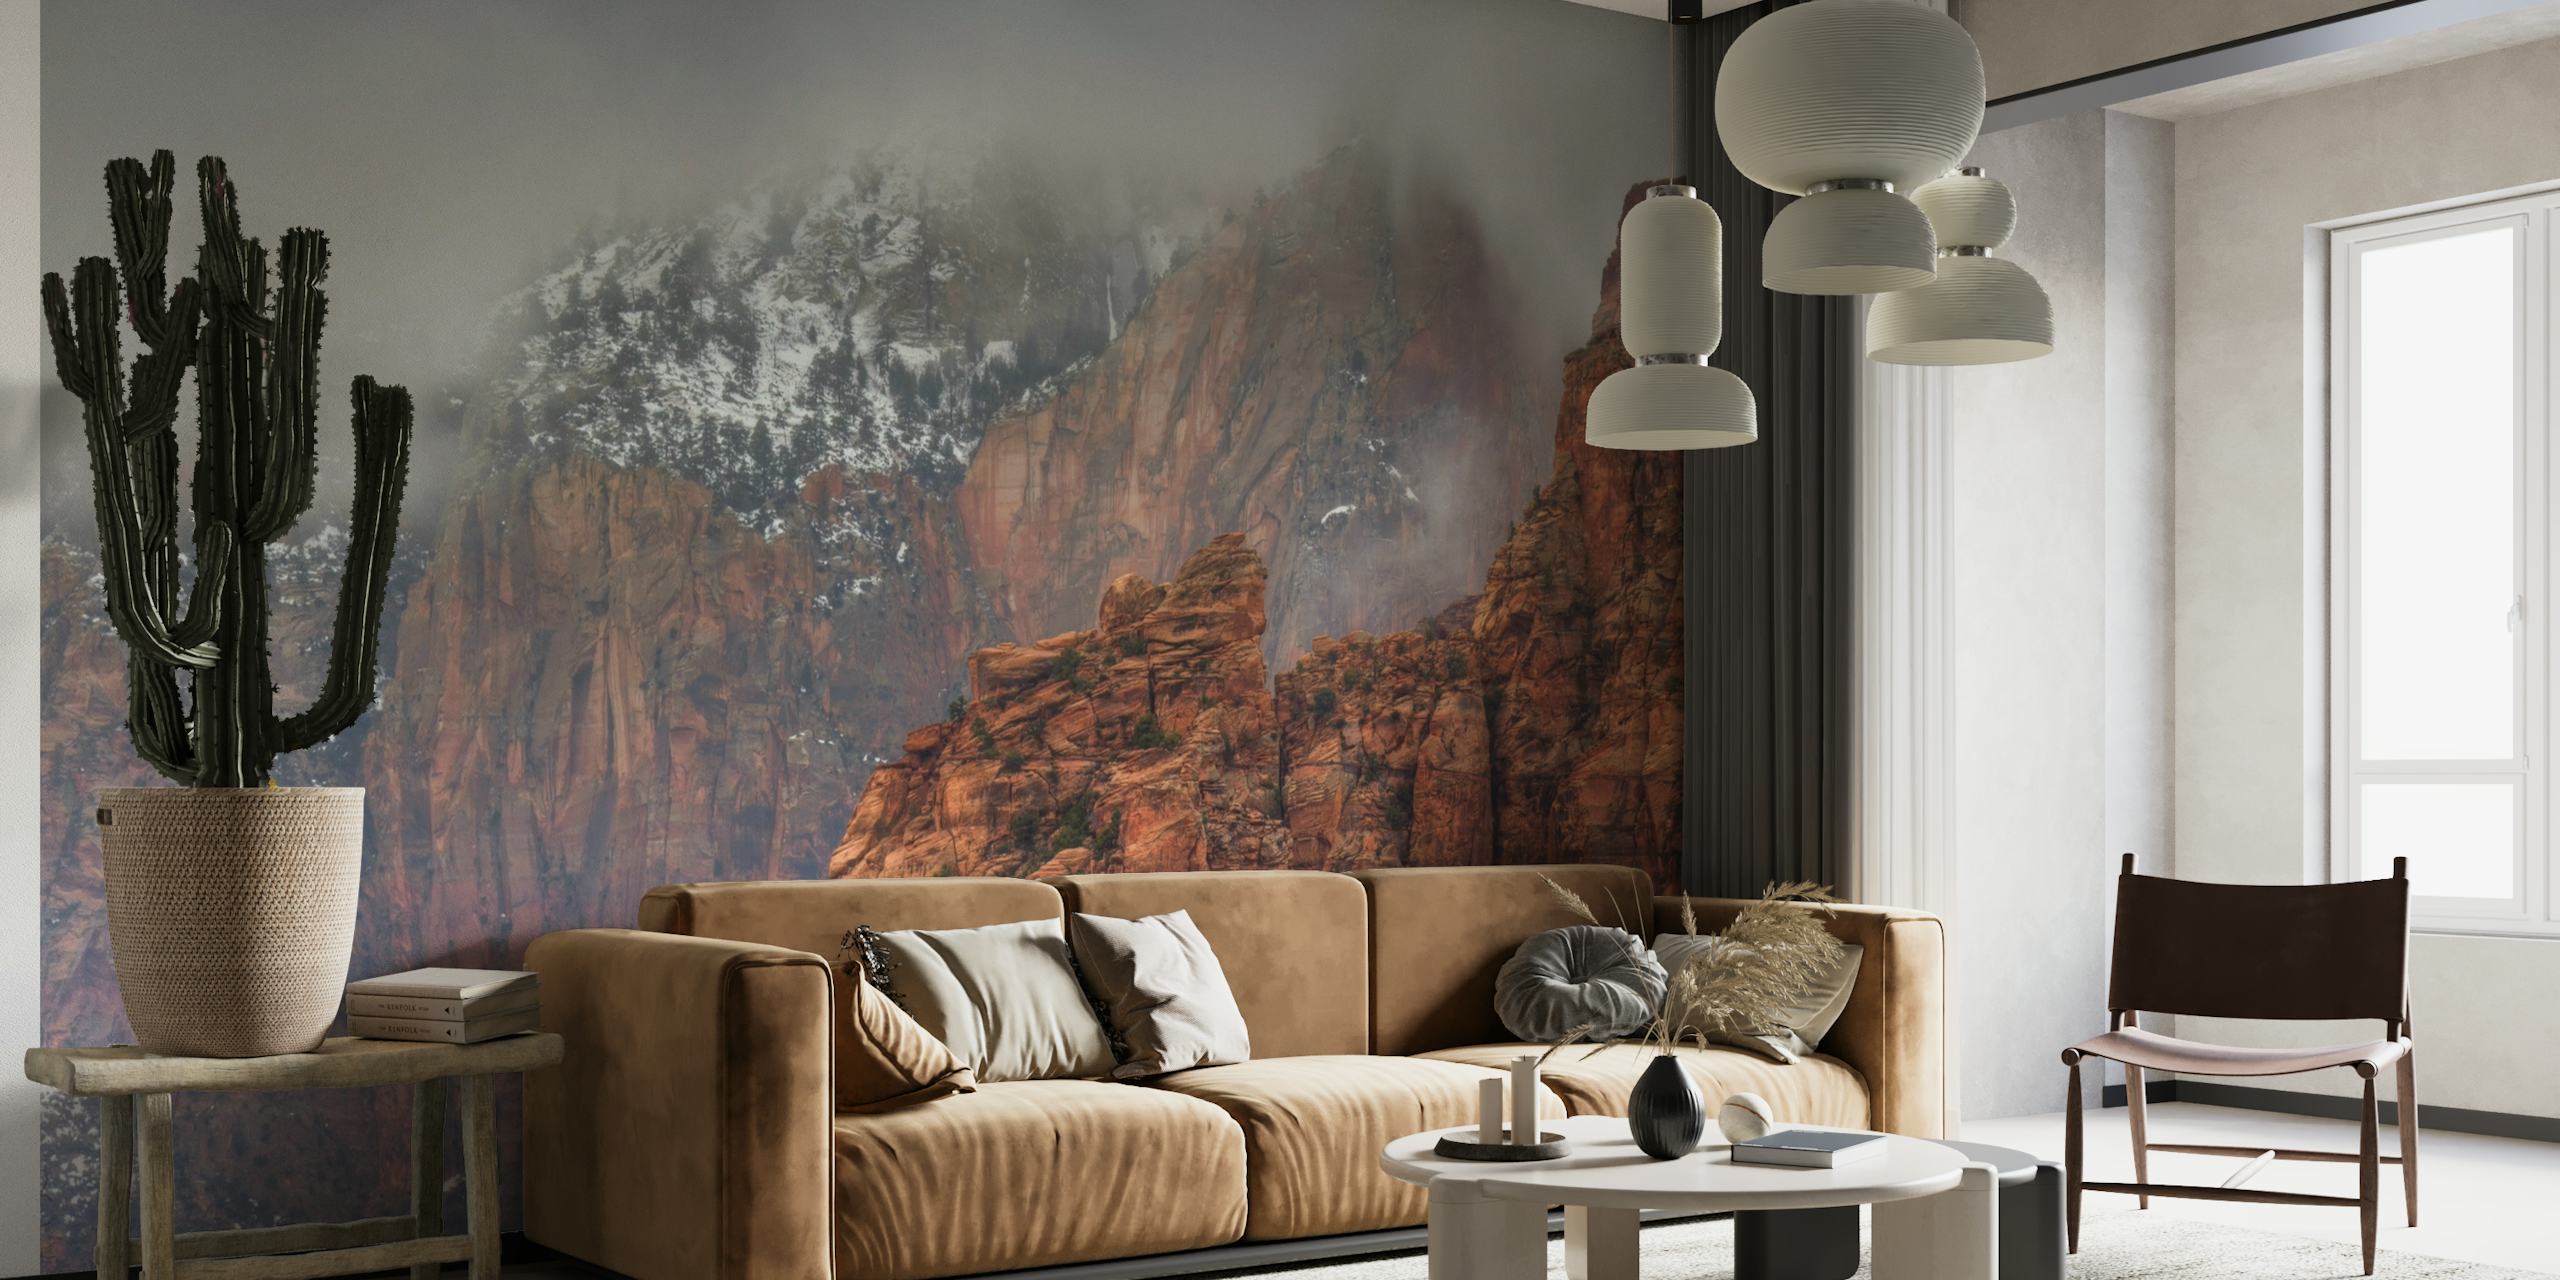 Mural de parede de montanha enevoada com texturas rochosas e tons quentes